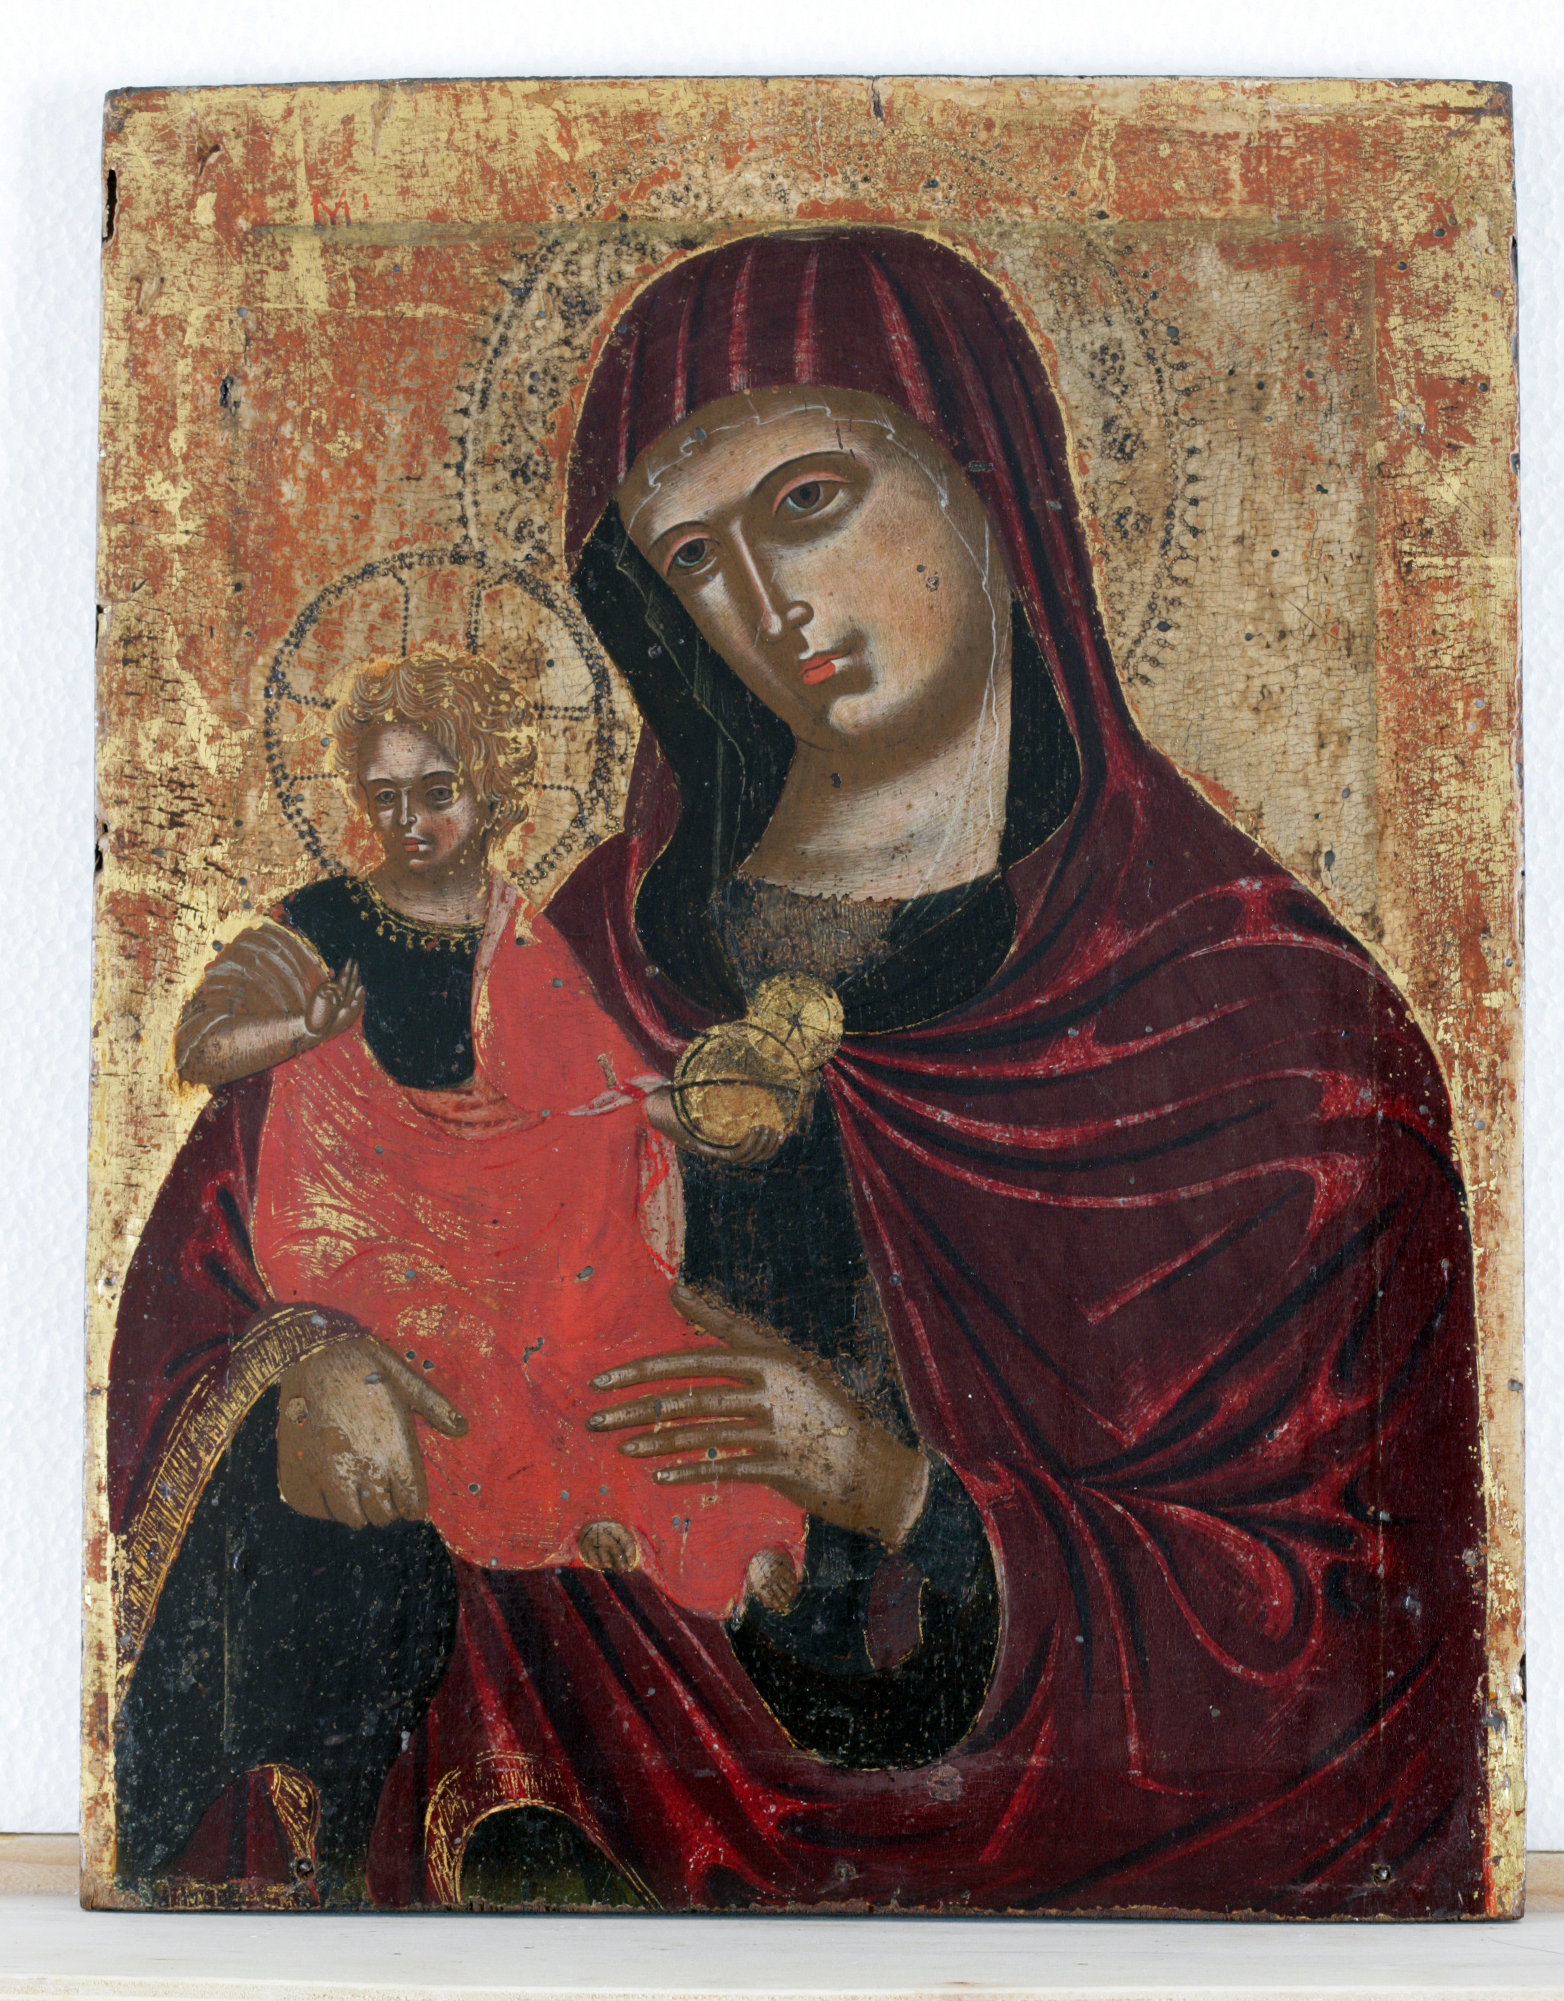 Vergine hodegetria (icona, opera isolata) - scuola cretese-veneziana (sec.XVI - XVII)